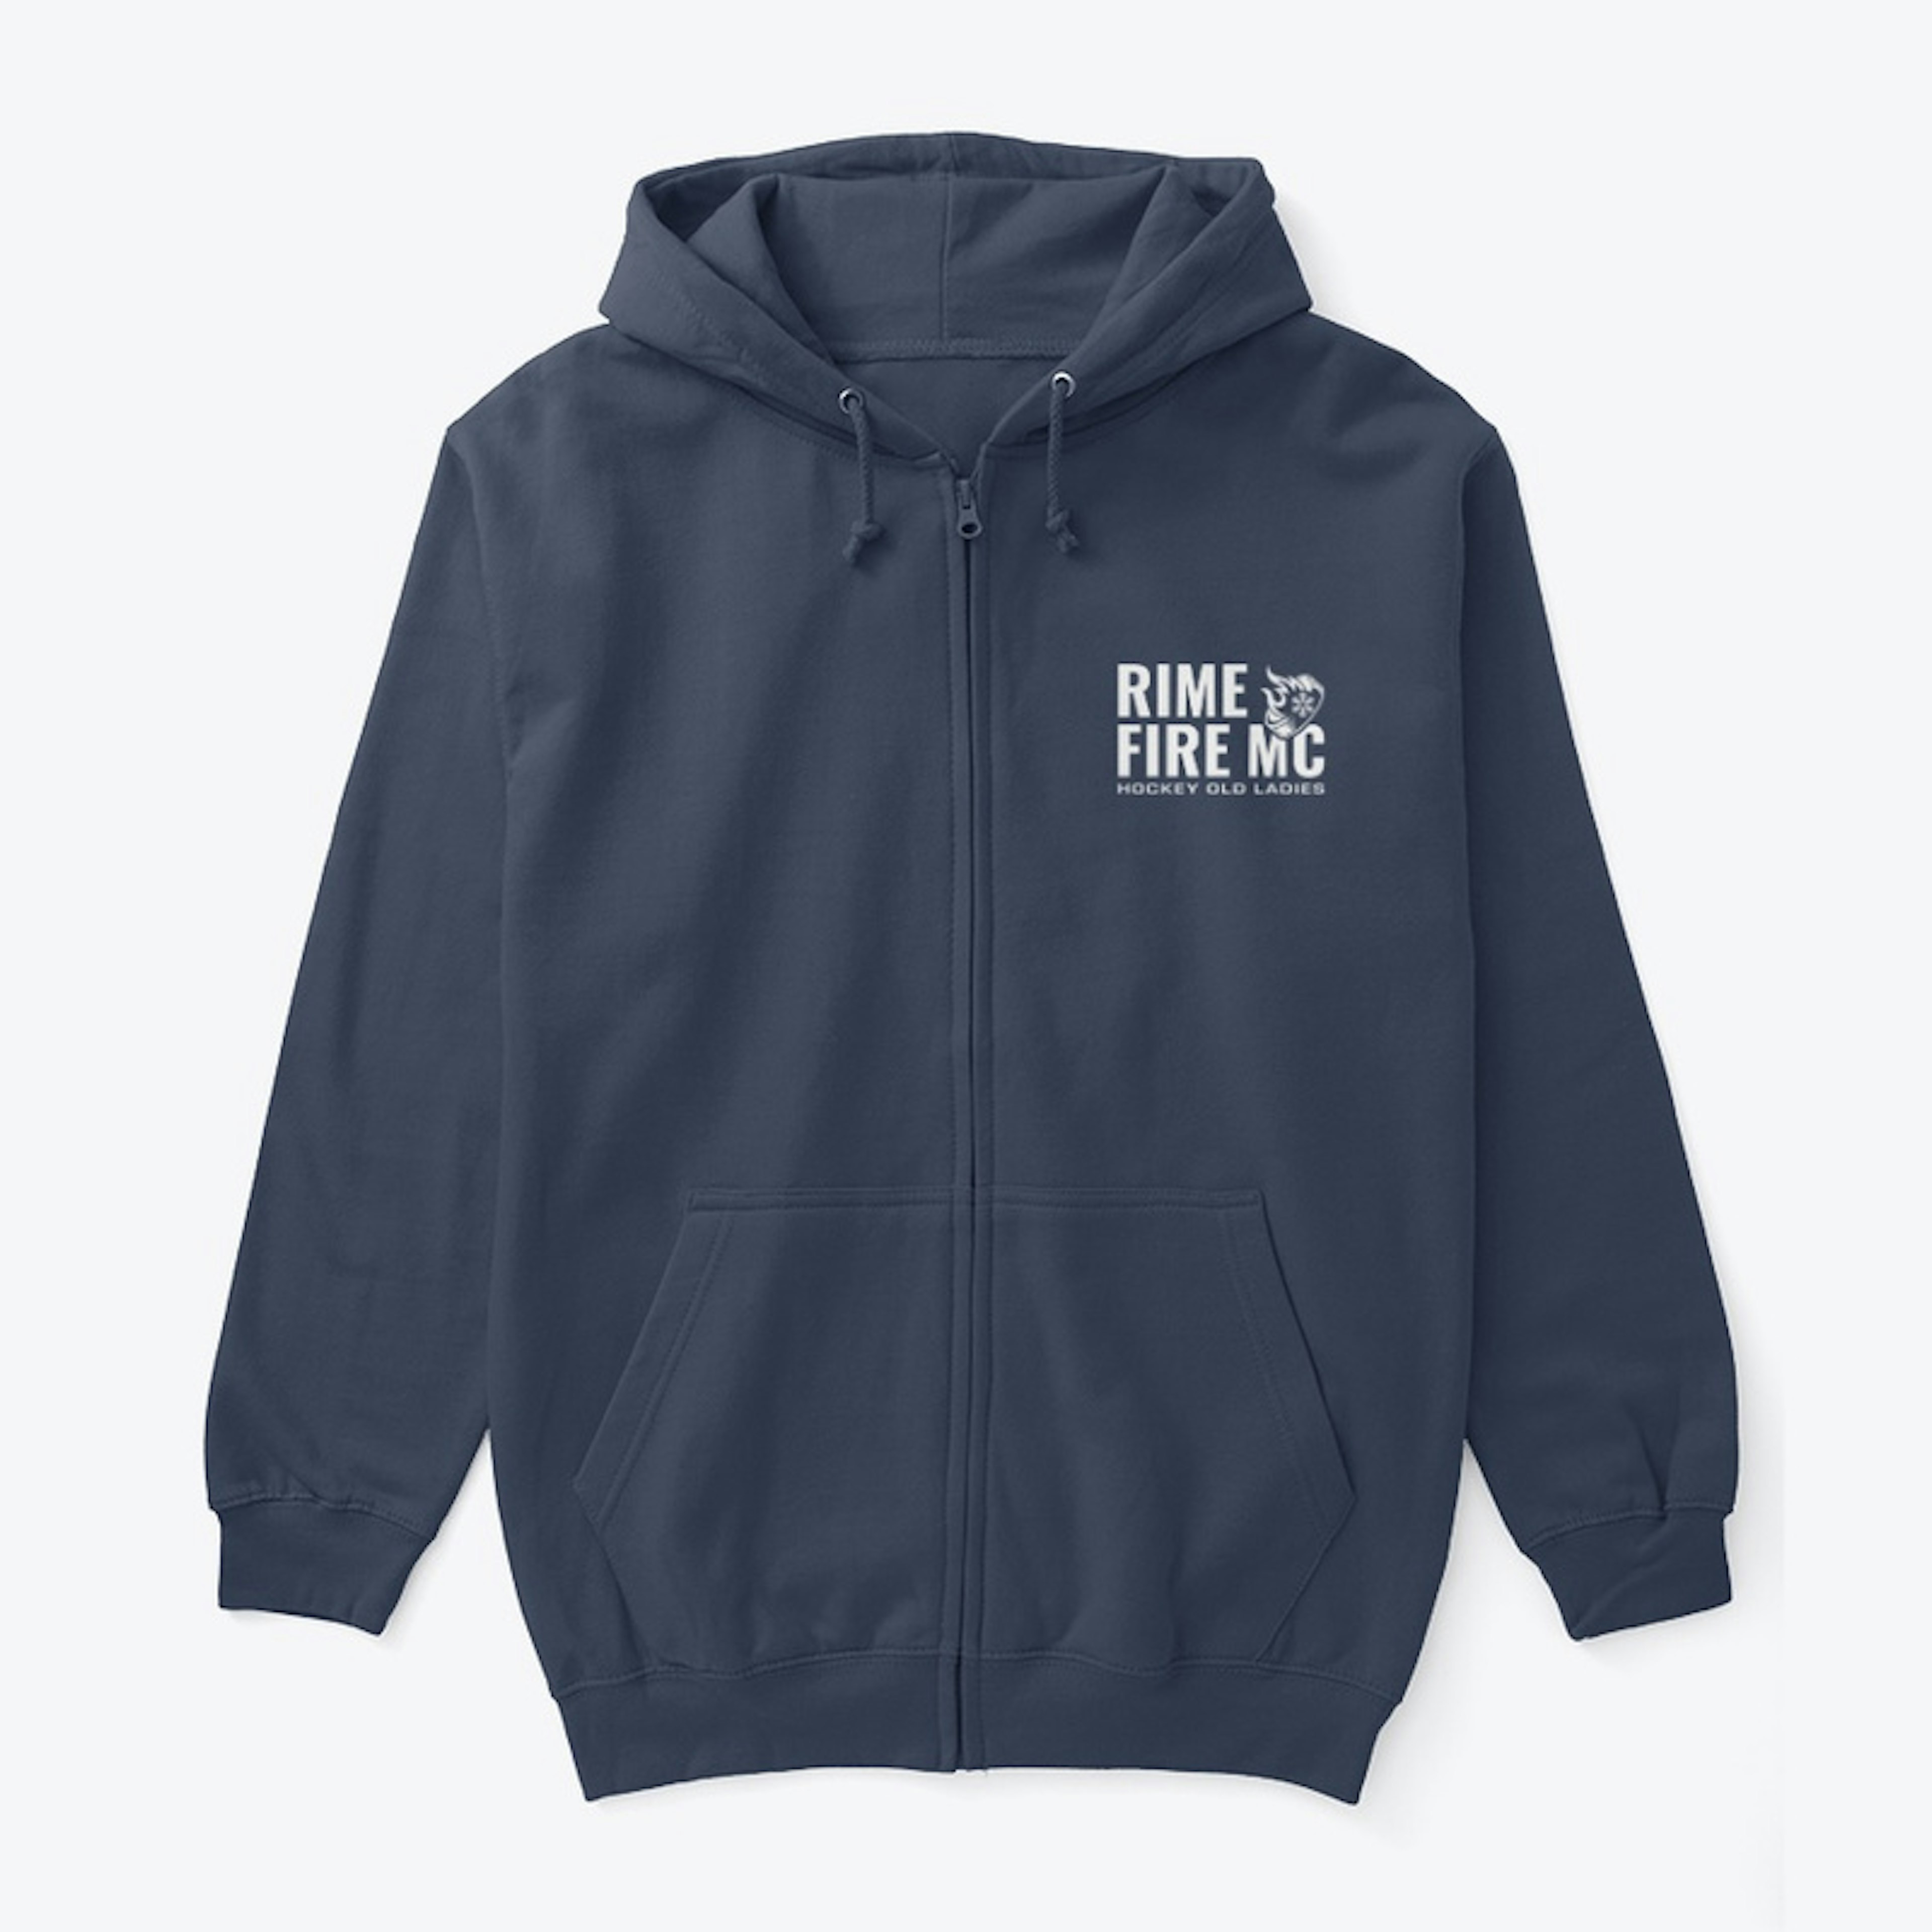 Rime Fire MC zip hoodie